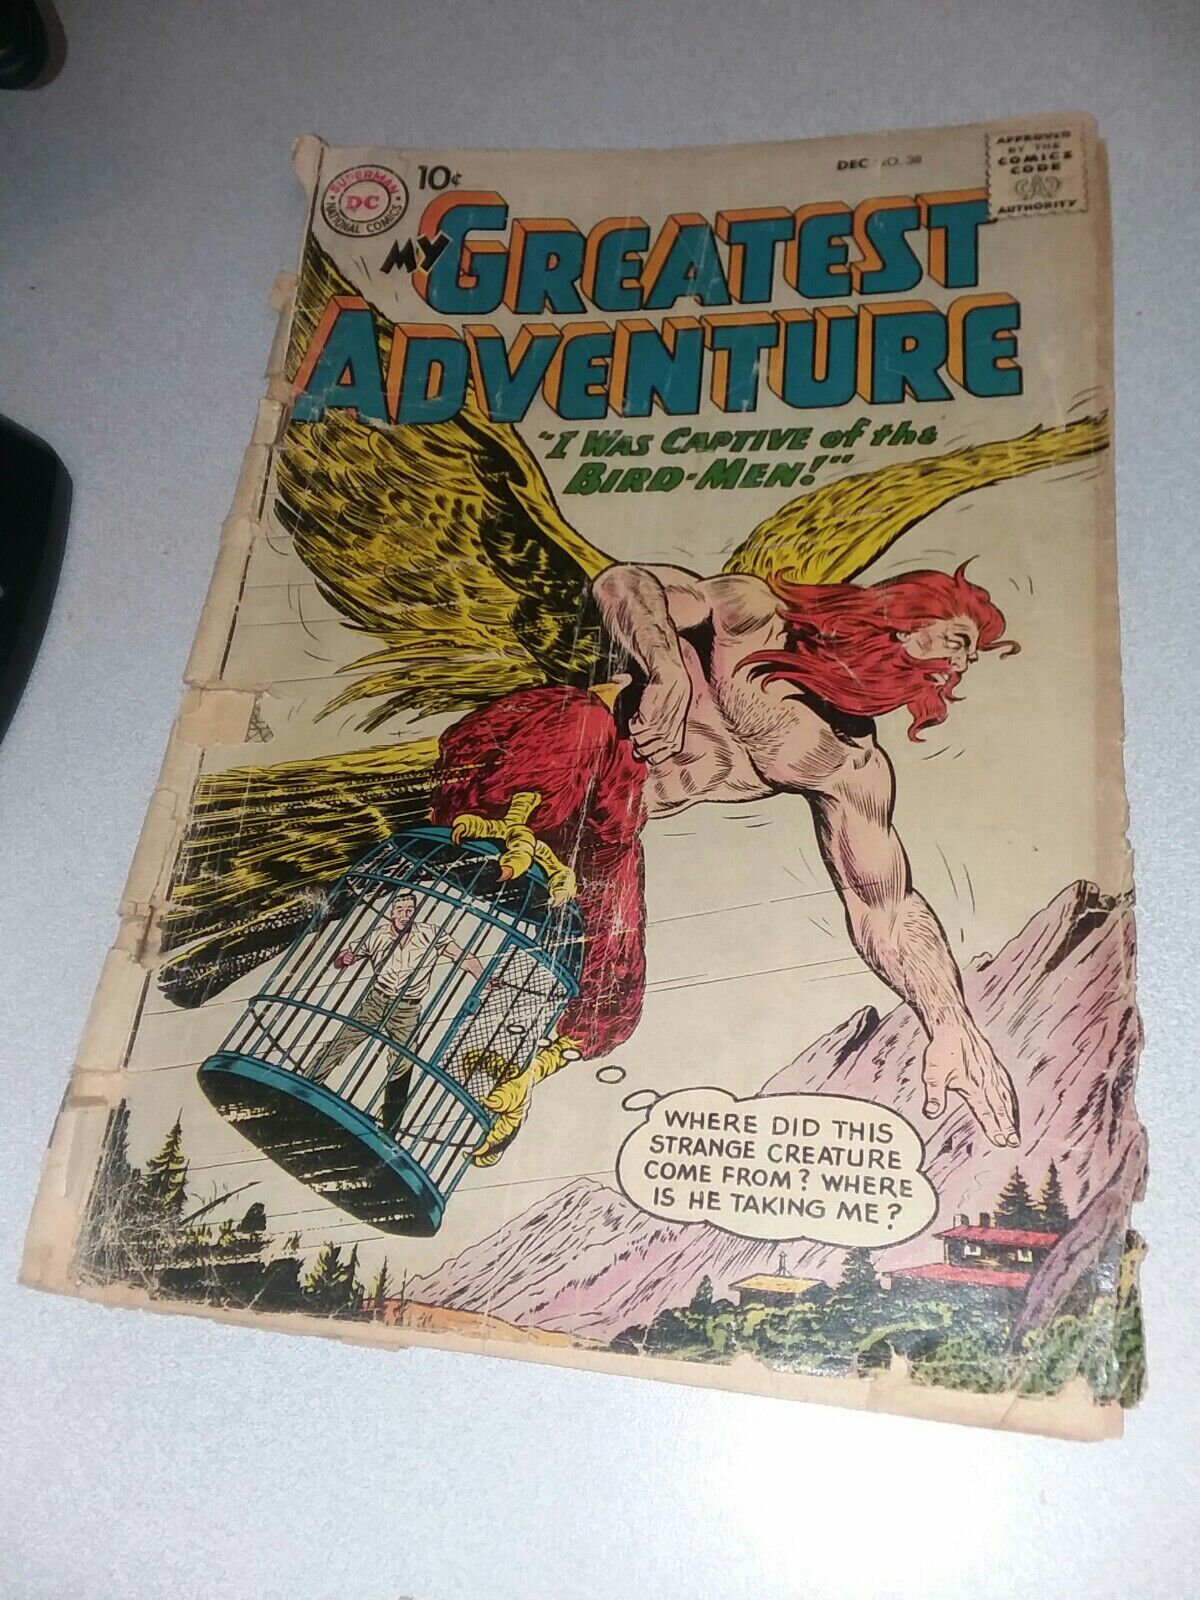 My Greatest Adventure #38 dc comics 1959 Golden age horror scifi classic scarce